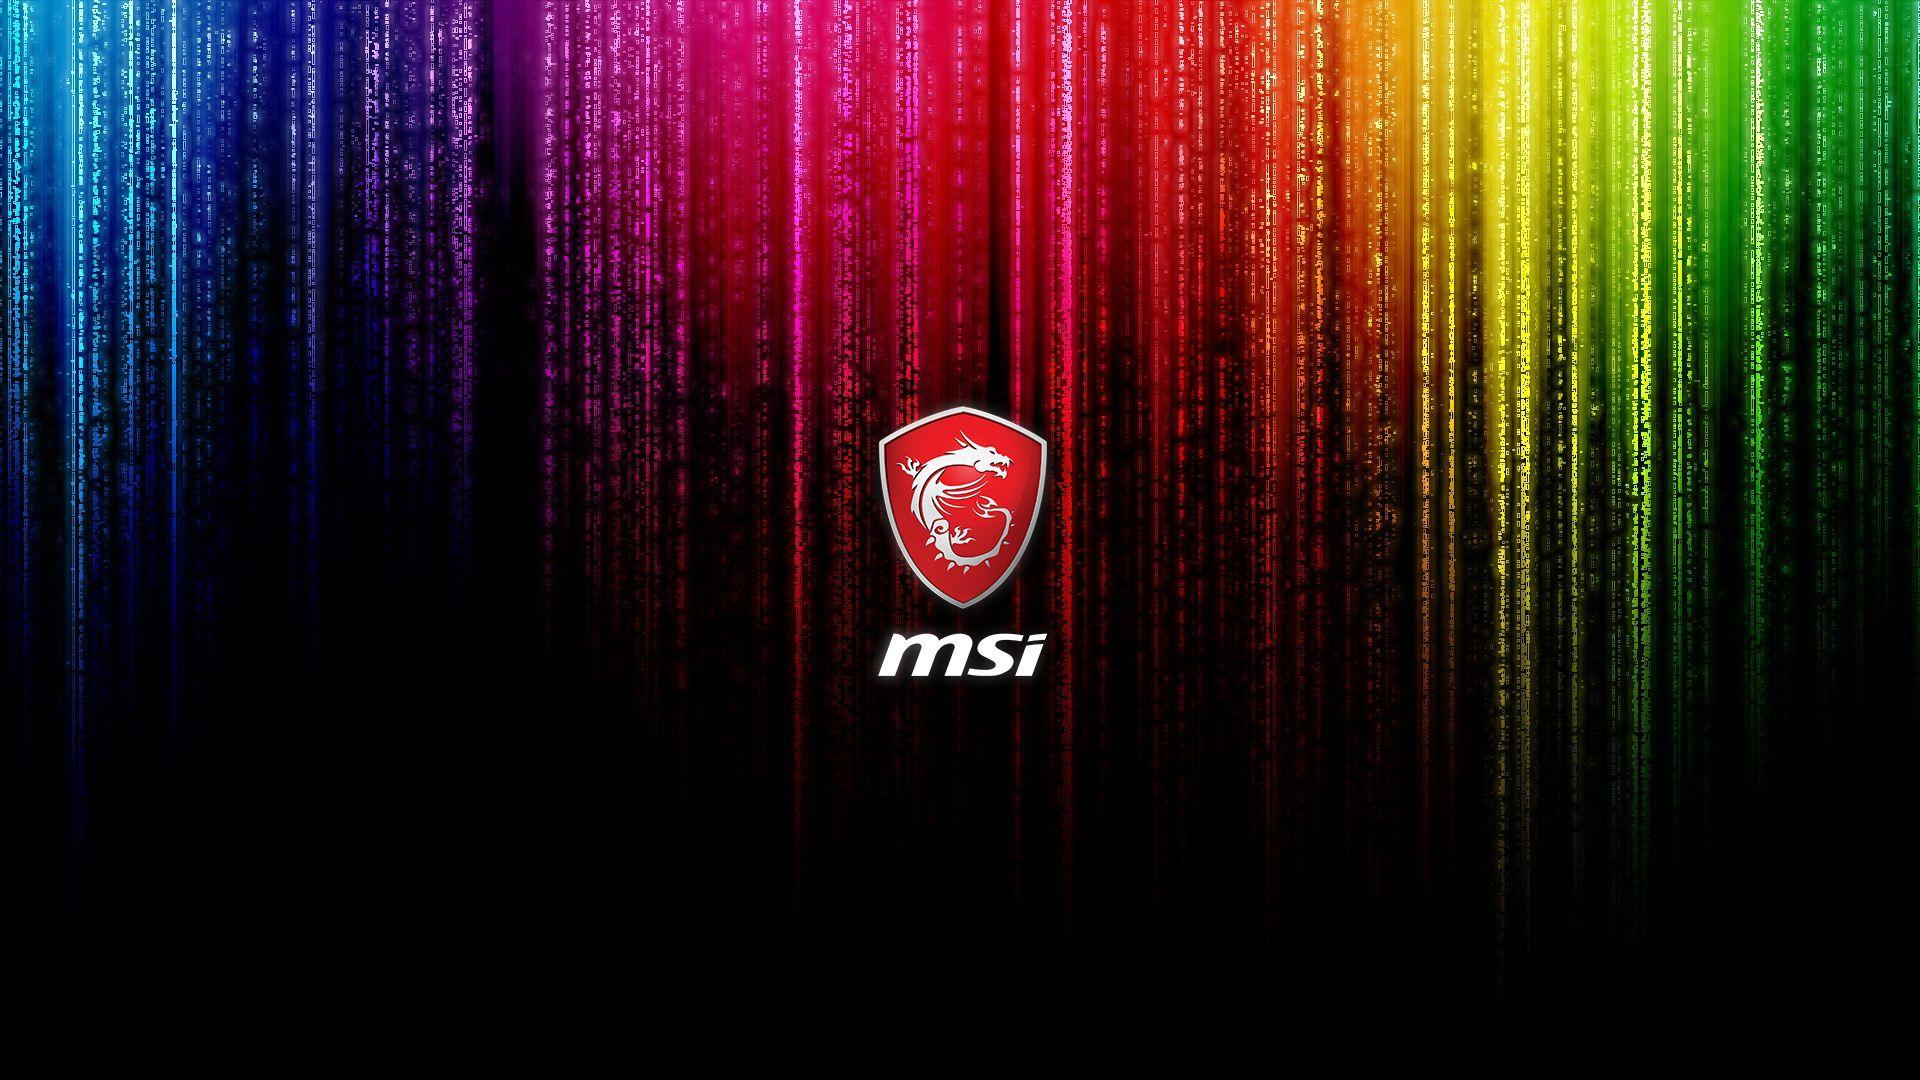 MSI RGB 4K Wallpapers - Top Free MSI